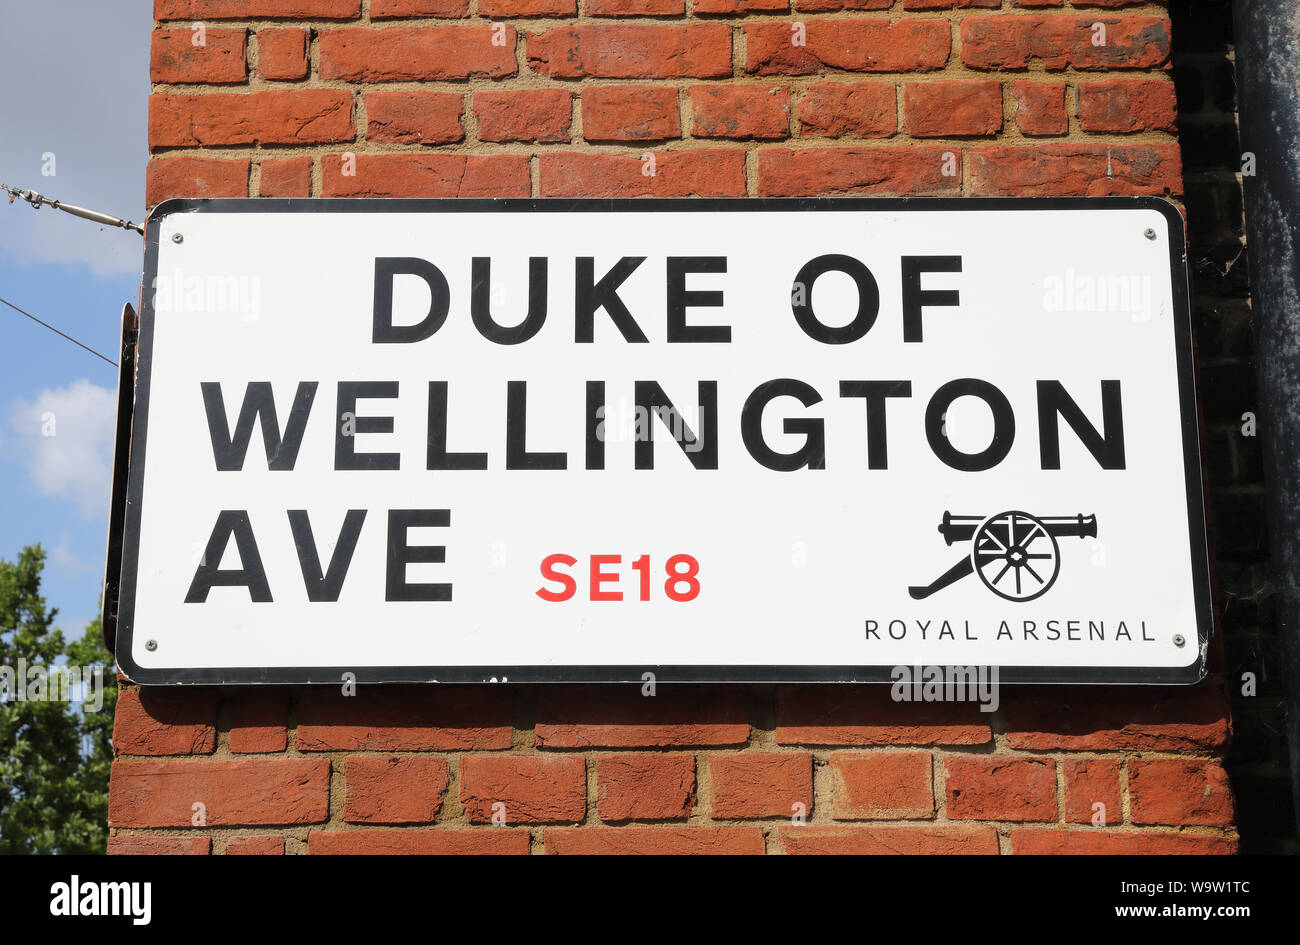 Road sign for Duke of Wellington Avenue in Royal Arsenal, in SE London, UK Stock Photo